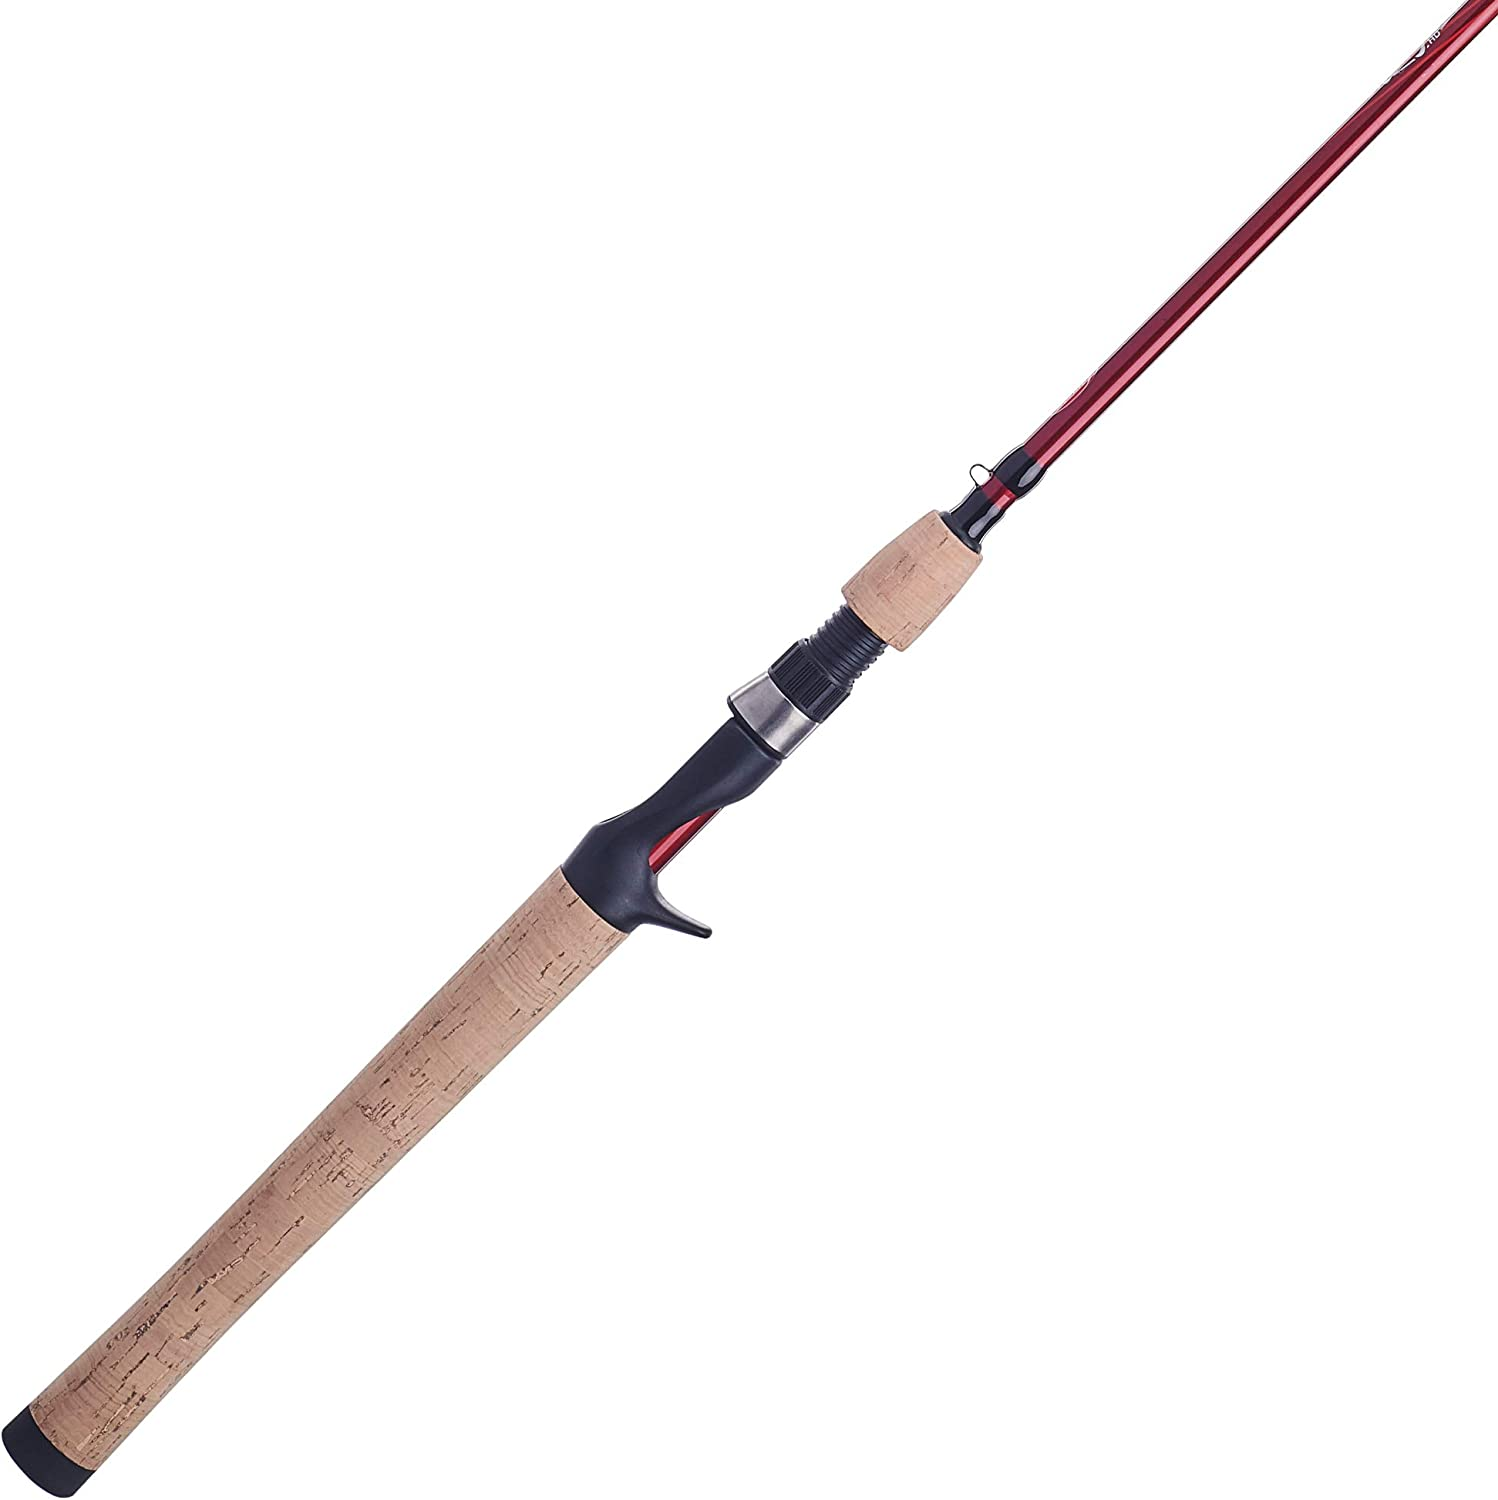 11. Berkley Cherrywood HD Casting Fishing Rods - Best Baitcasting Rods For Beginners